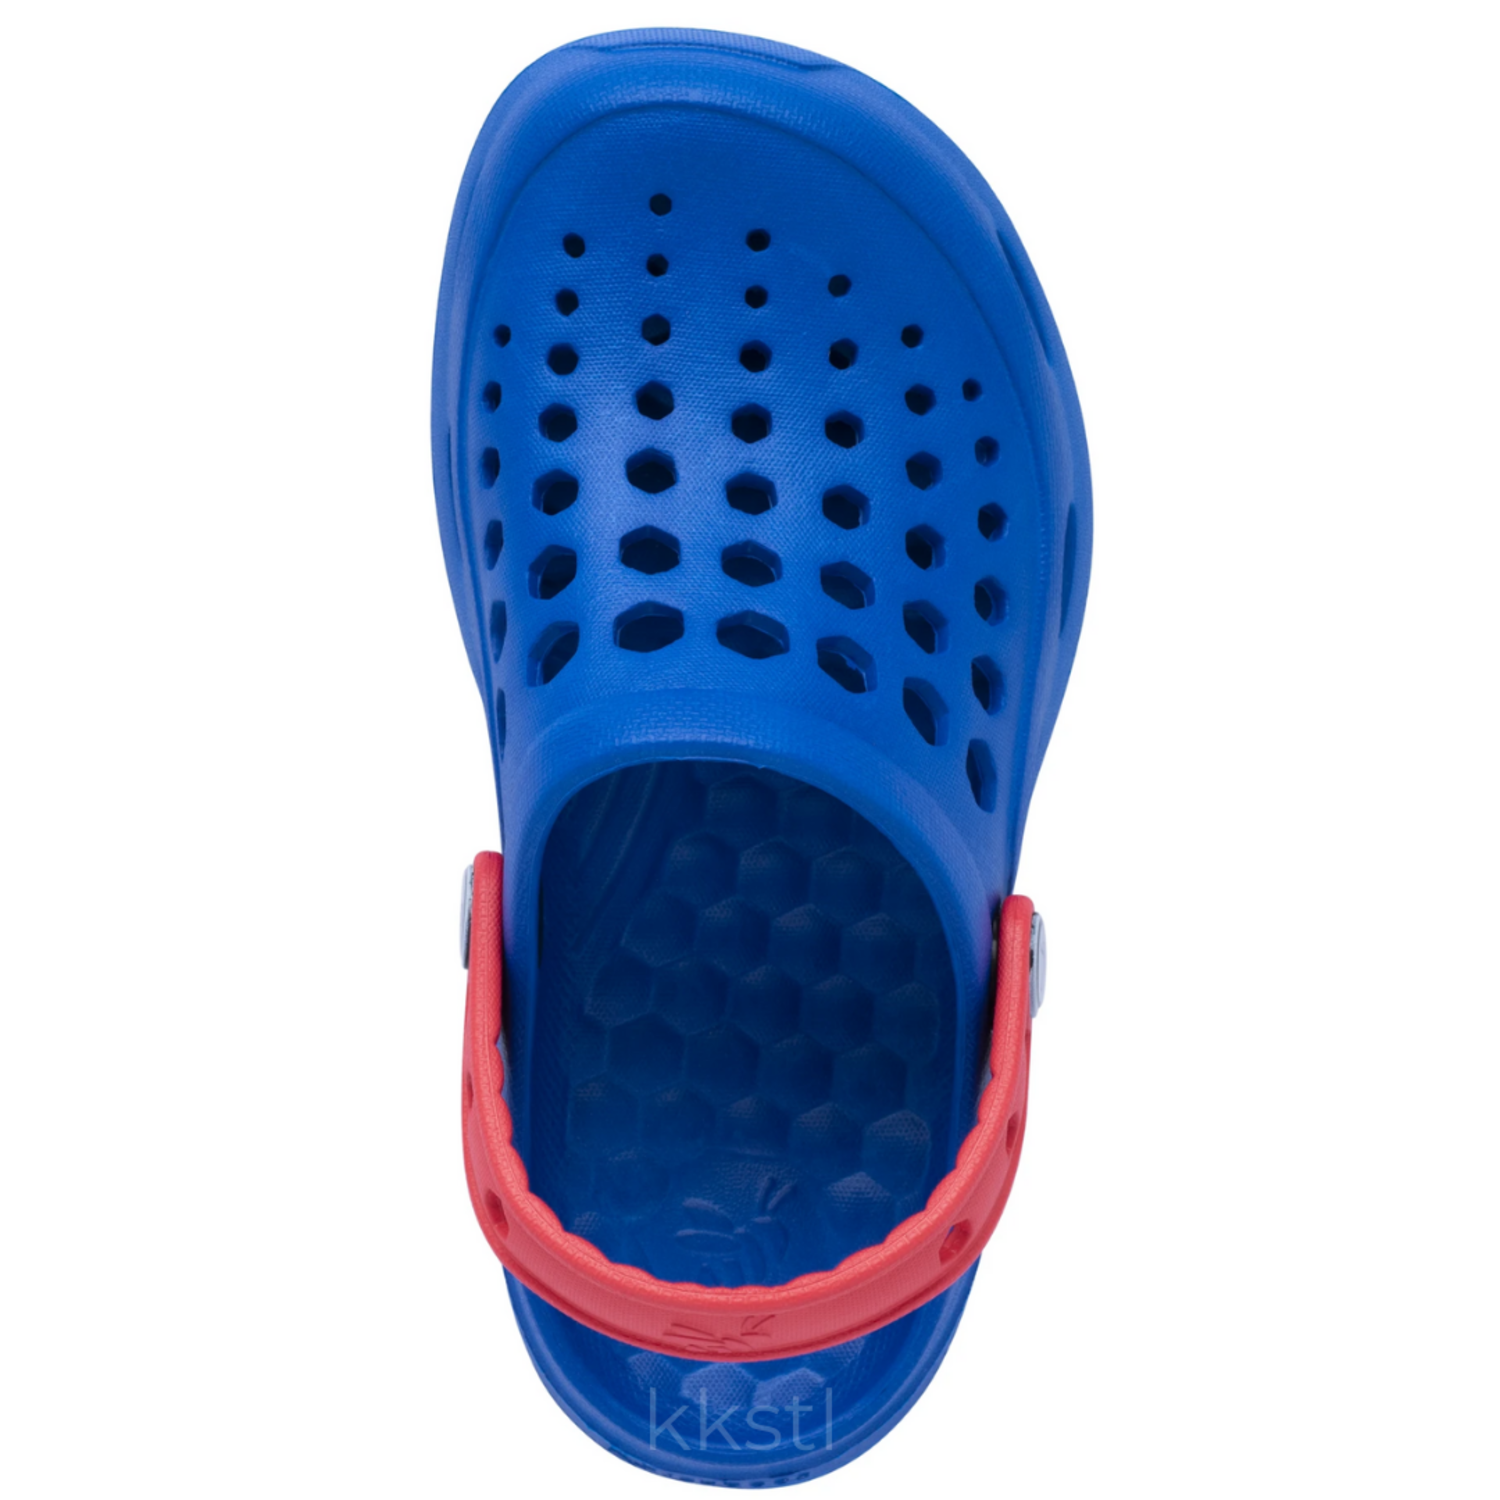 Joybees Kids' Active Clog Sport Blue/Red - Kids Shoes in Canada - Kiddie  Kobbler St Laurent